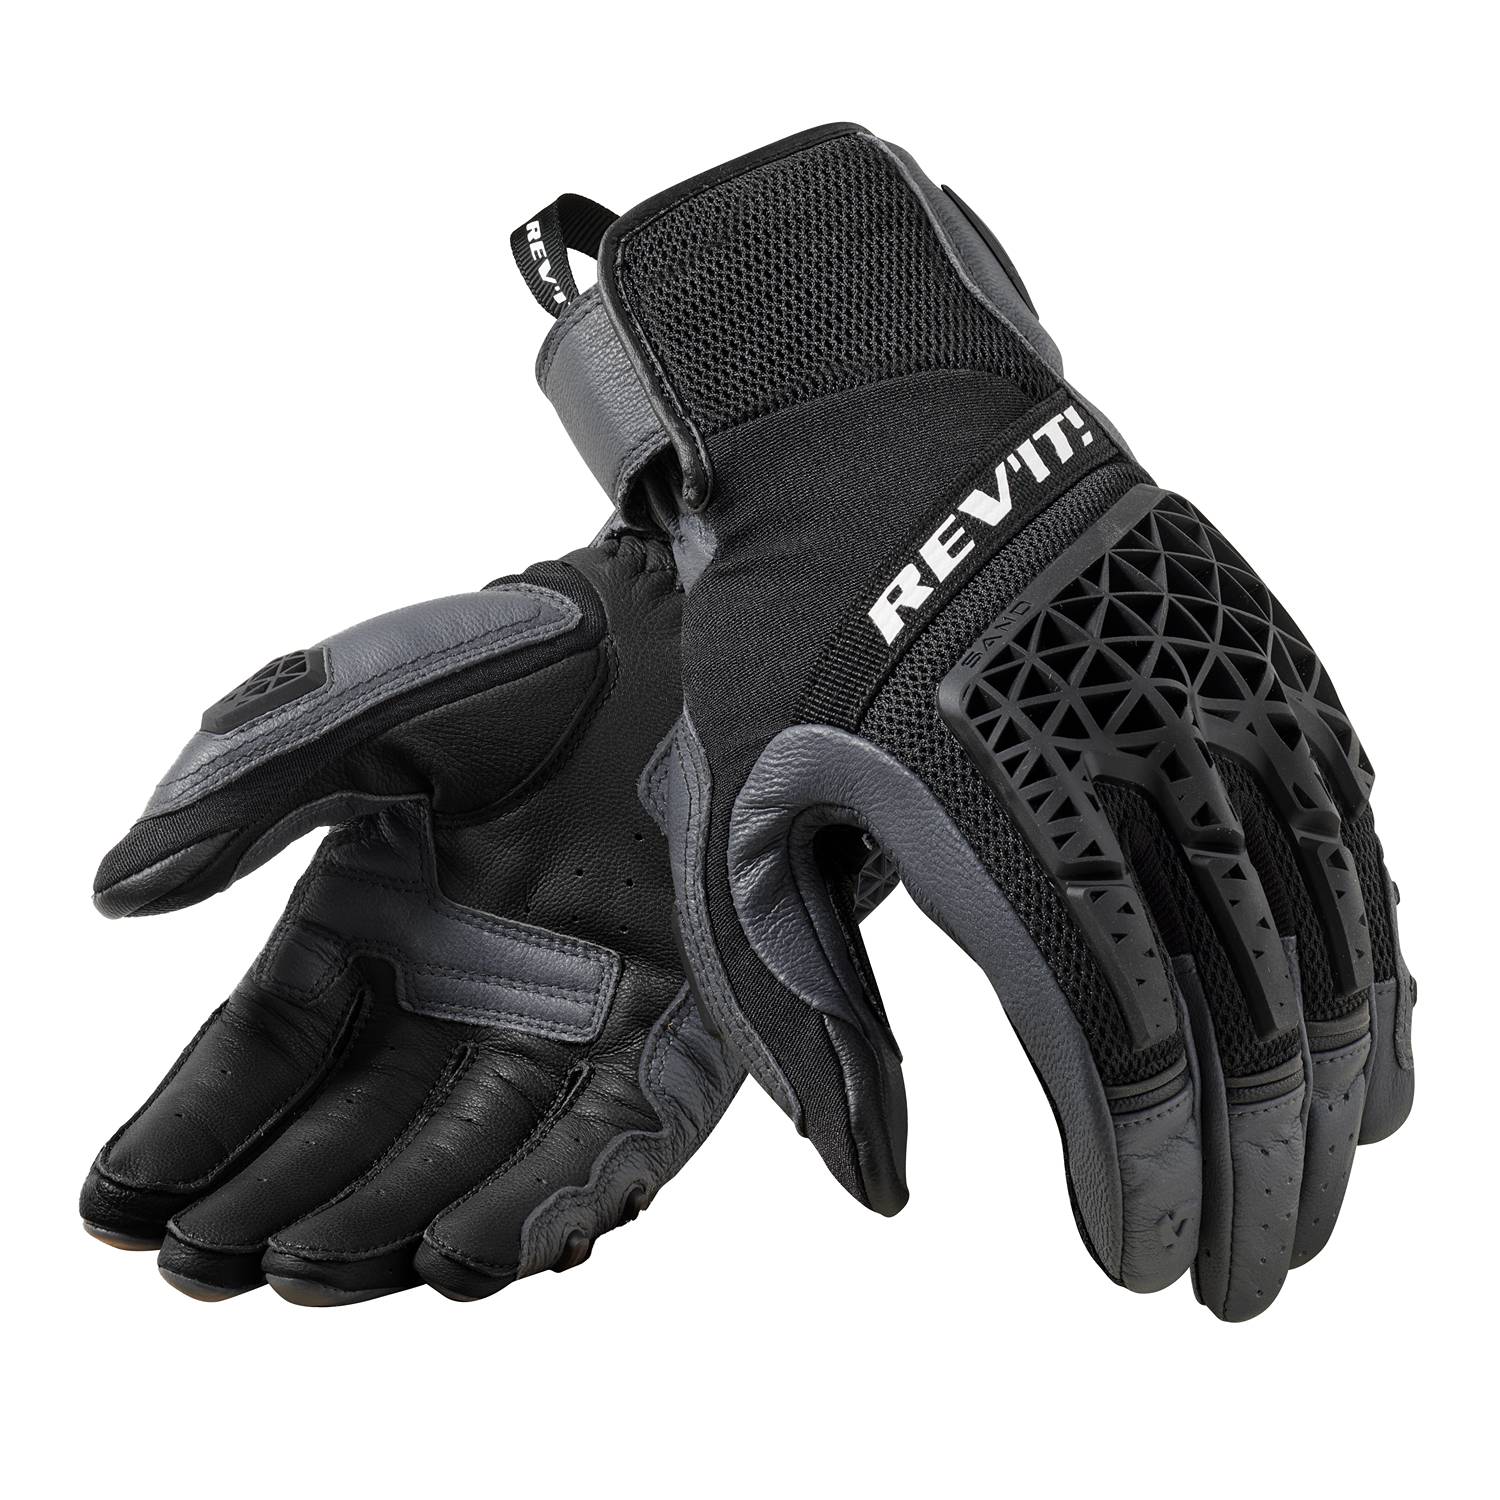 Image of REV'IT! Sand 4 Gloves Gray Black Size 3XL EN